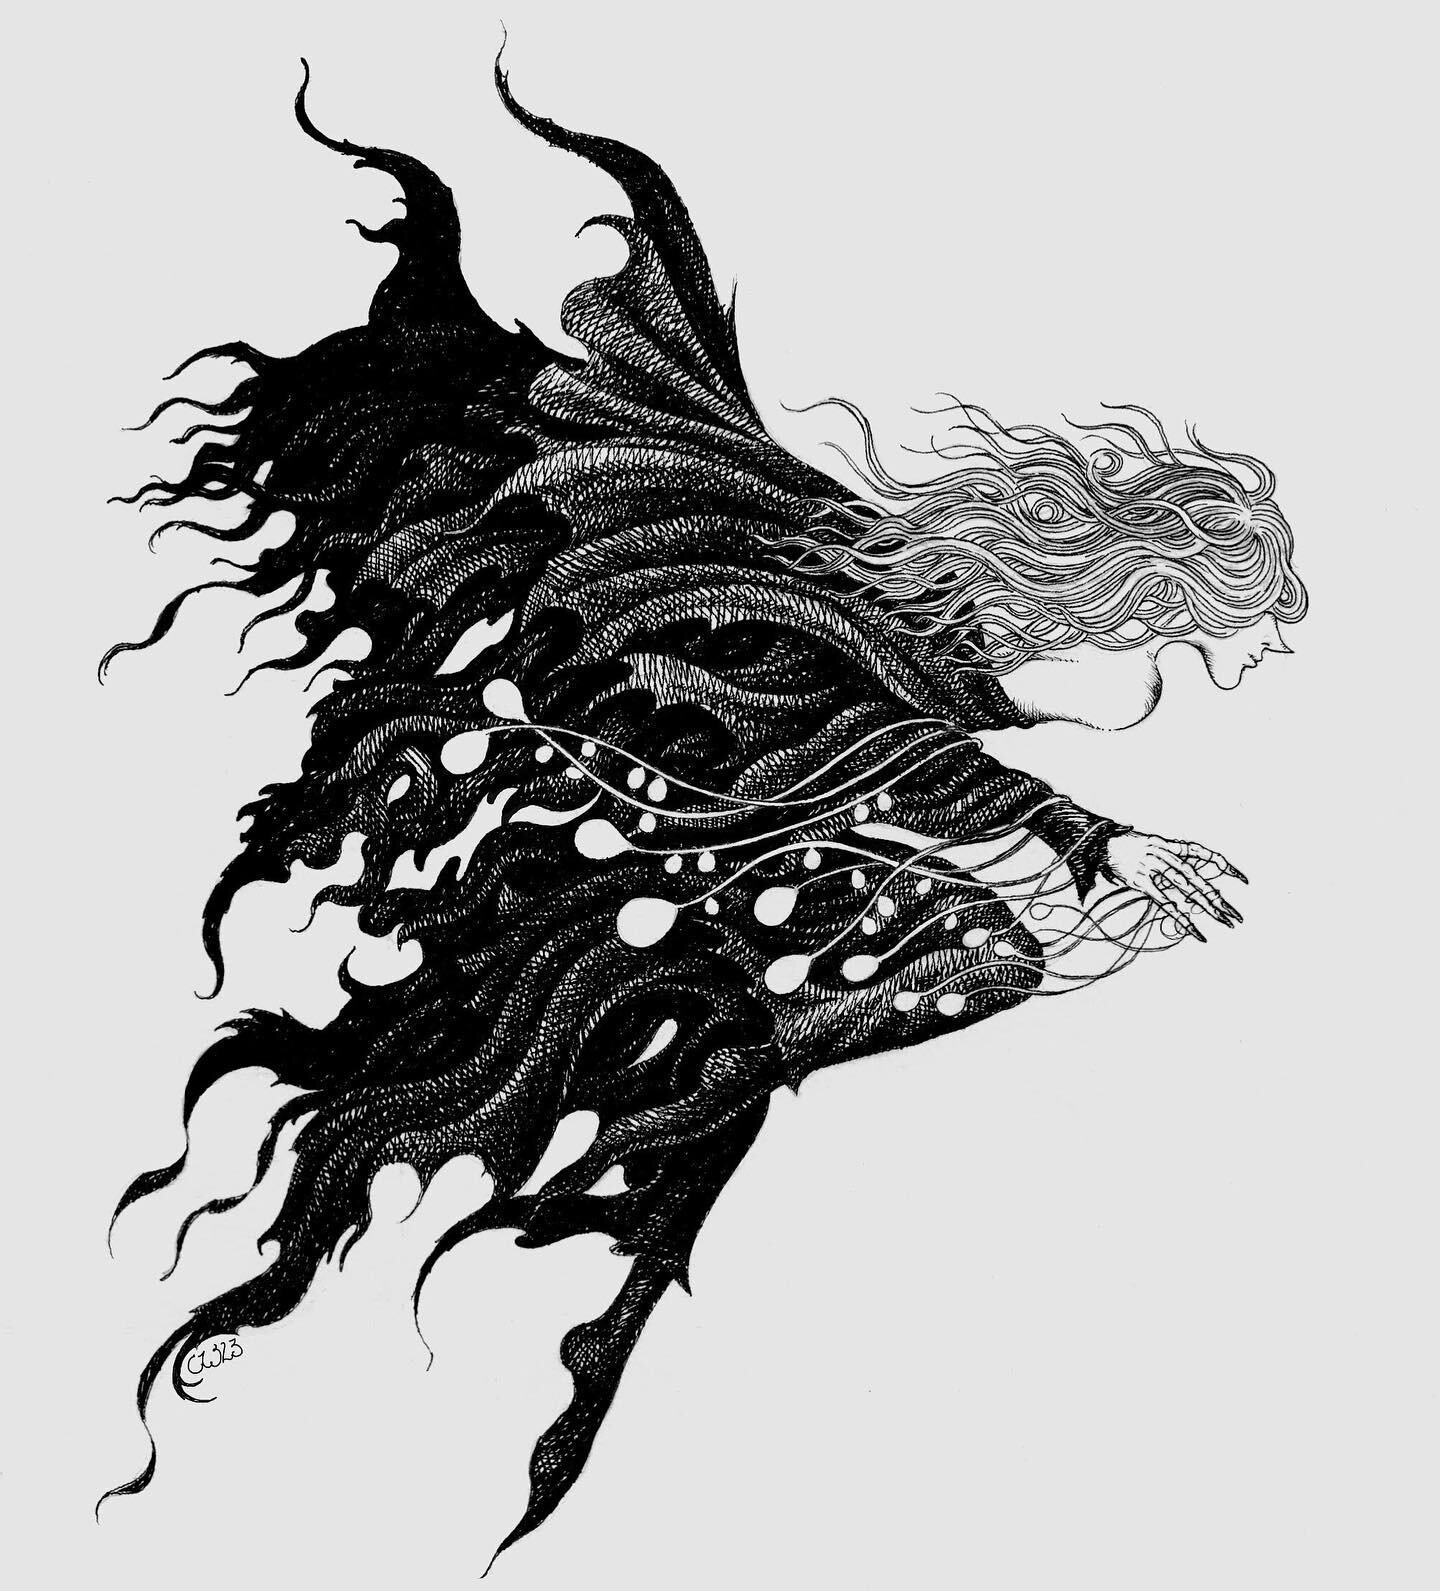 Looming Lucifer
🦇🦇🦇

.
.
.
.

#illustration #drawing #linework #iblackwork #darkartist #darkartists #gothicstyle #gothicart #harryclarke #onlythedarkest #engraving #goth